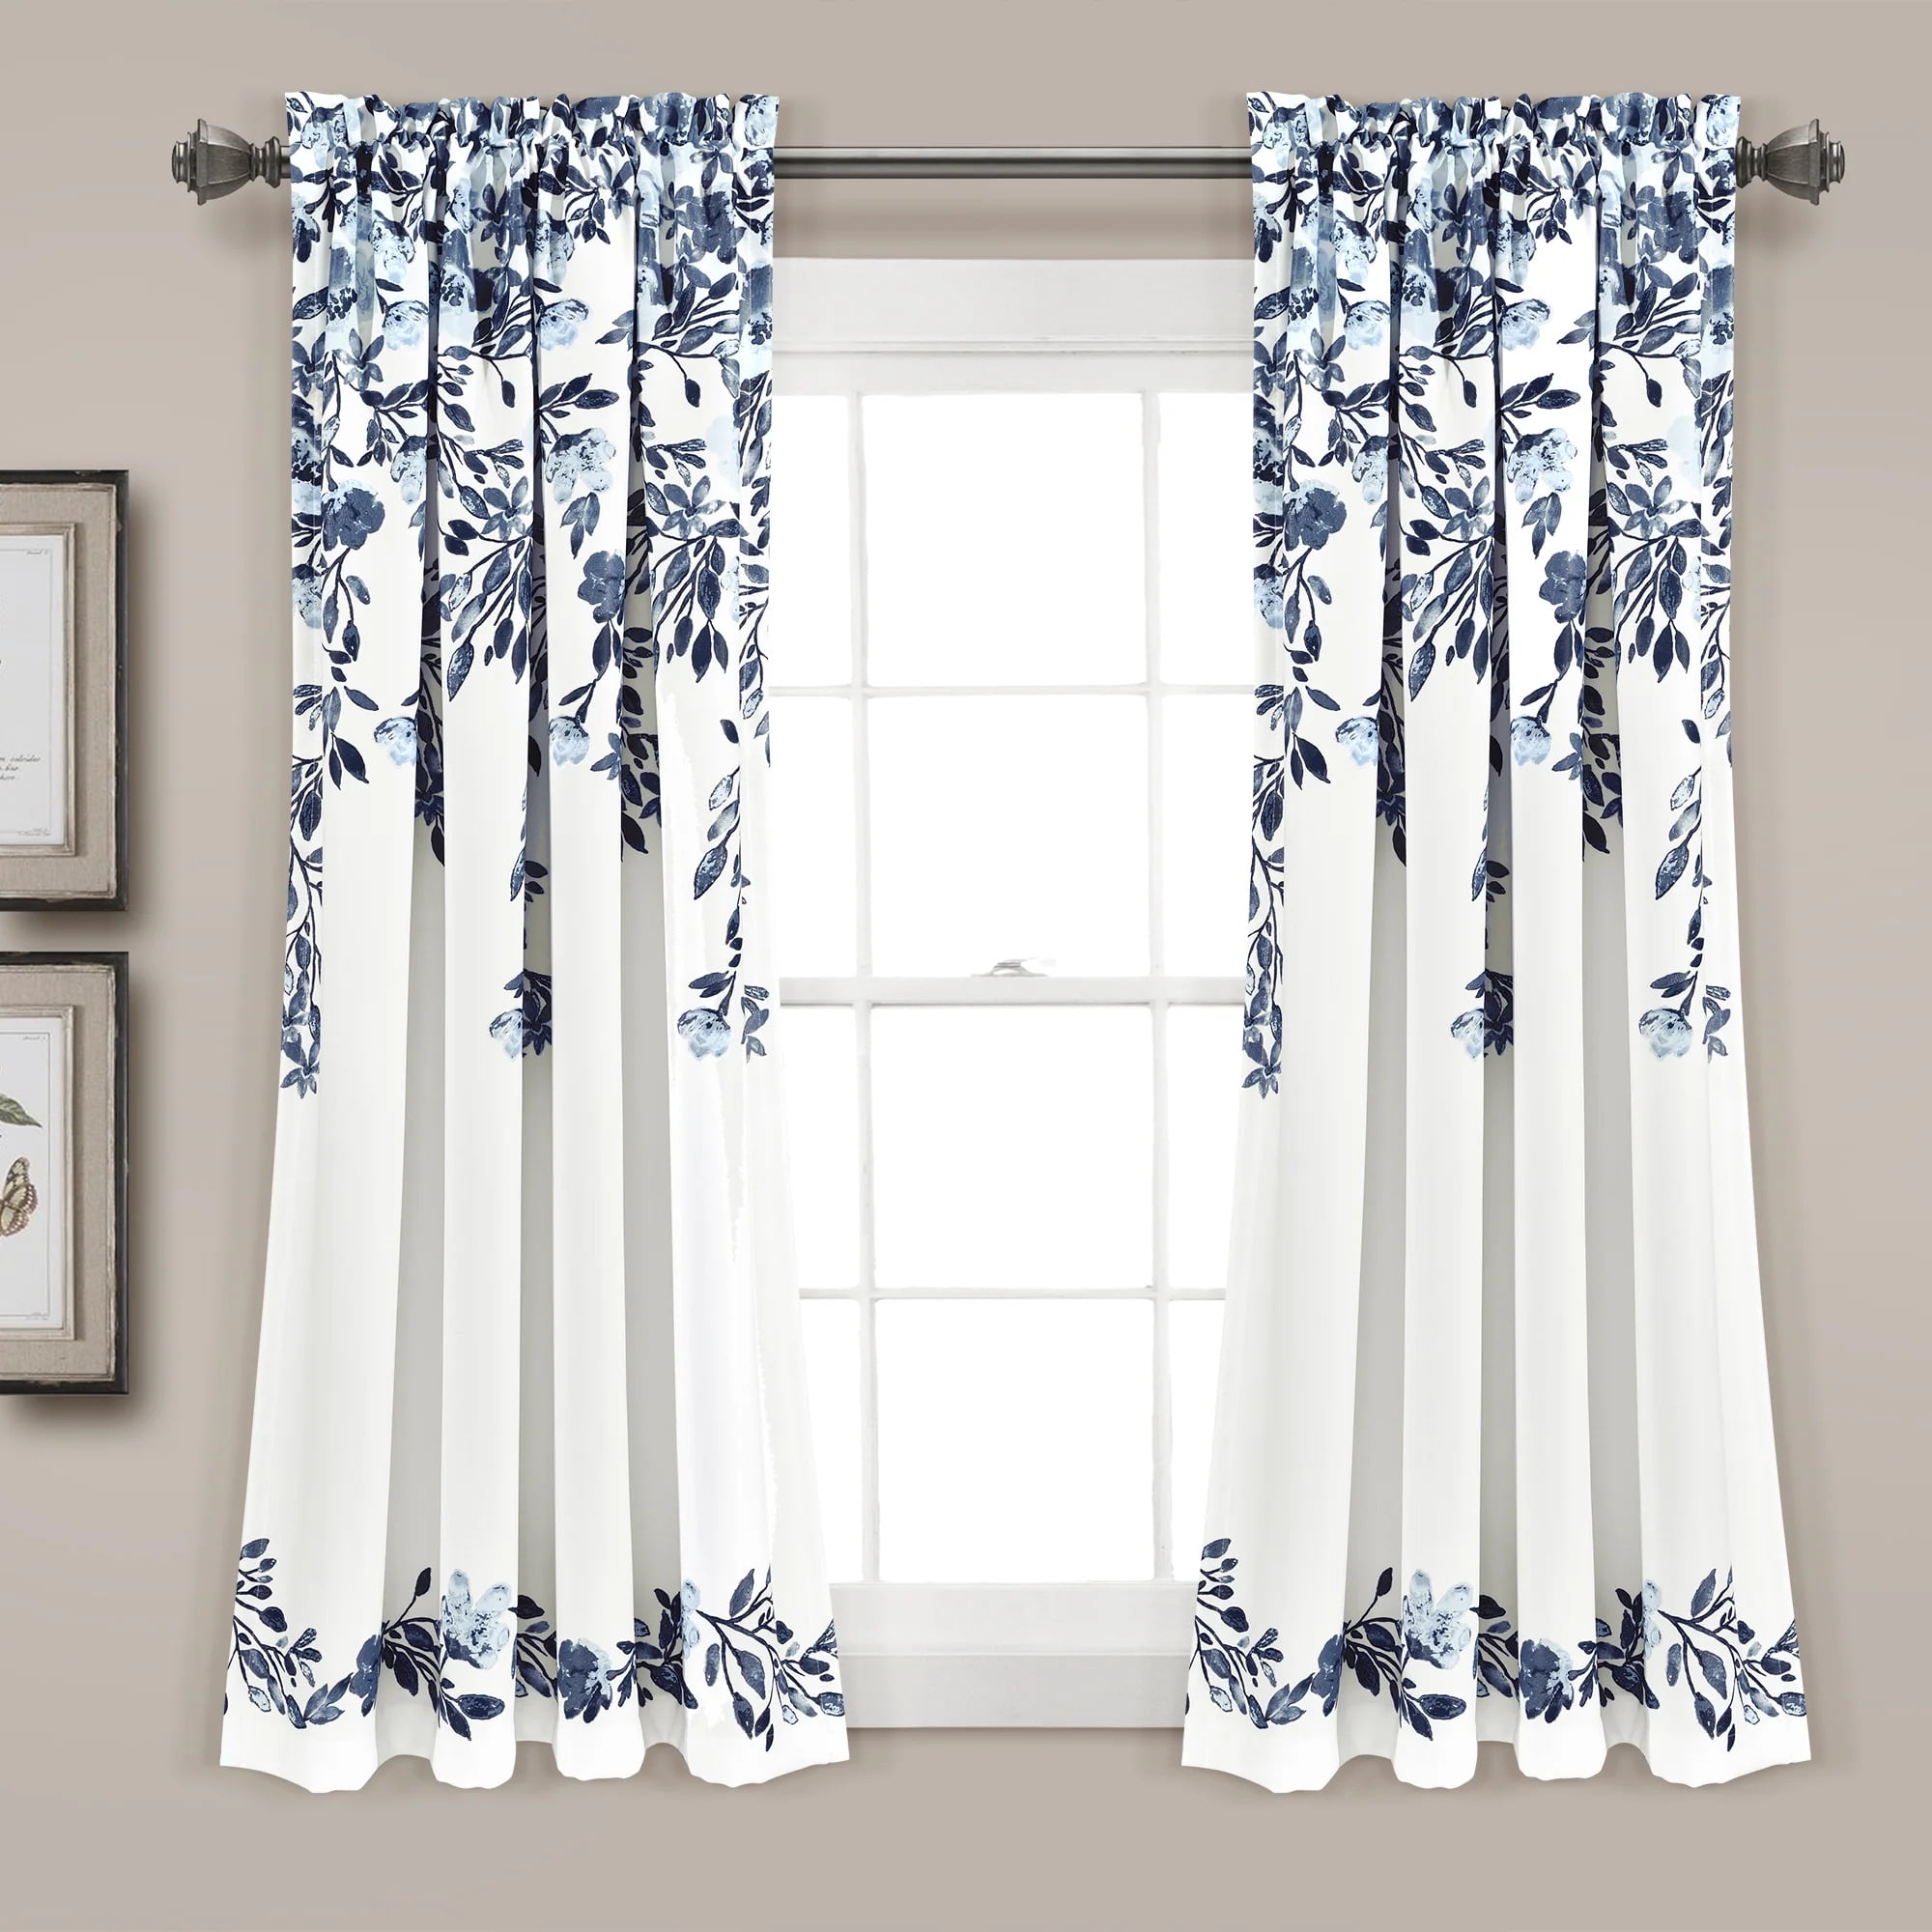 Lush Decor Tanisha Window Curtains, Floral Vine Print Design